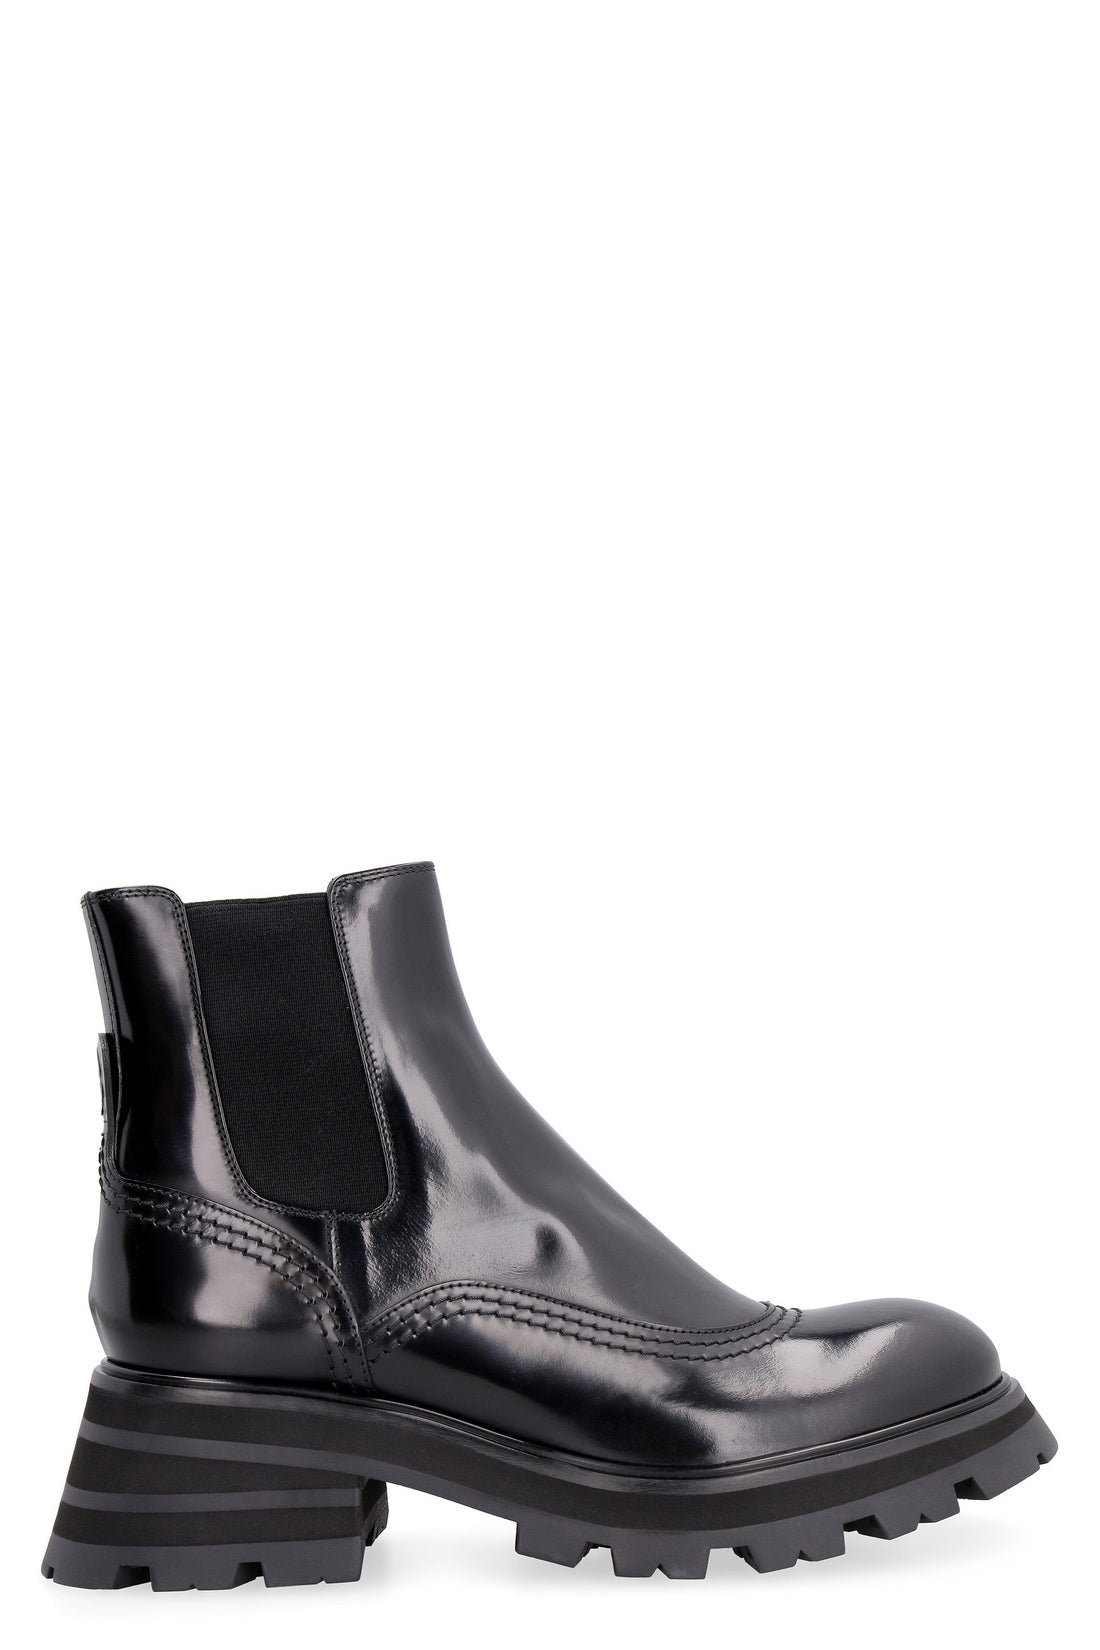 Alexander McQueen-OUTLET-SALE-Wander leather Chelsea boots-ARCHIVIST